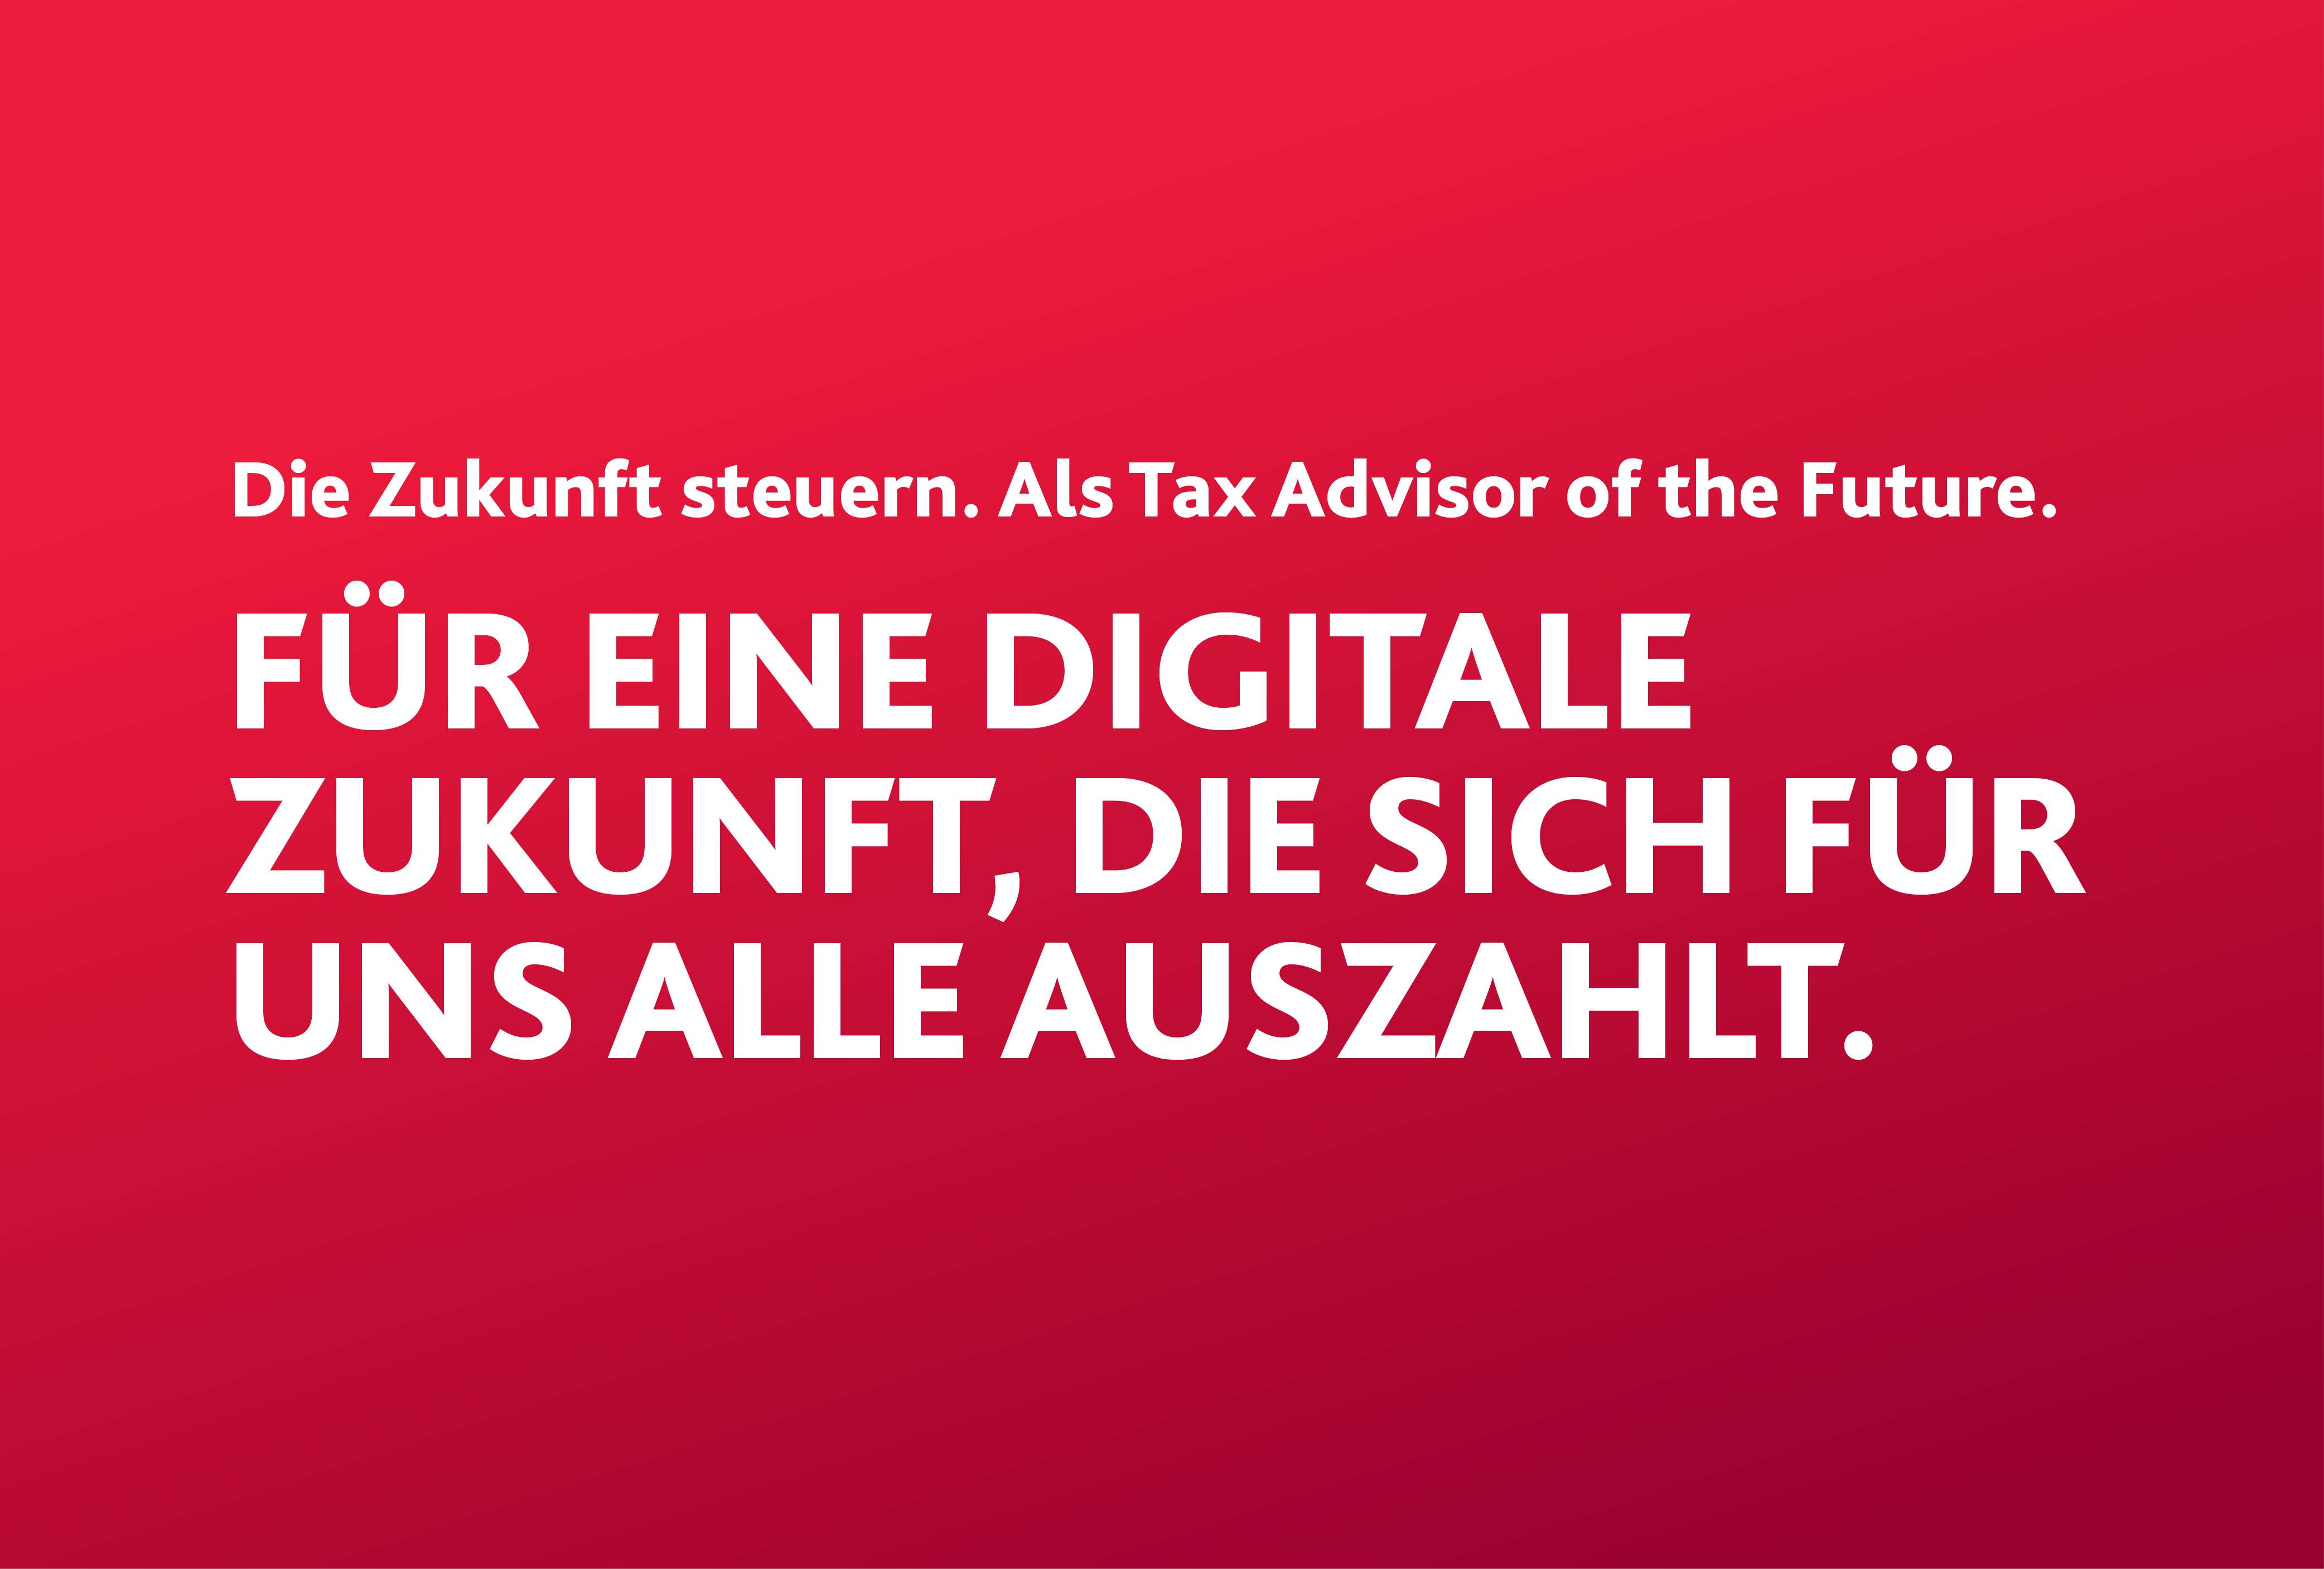 Tax Advisor of the Future, Digitale Zukunft